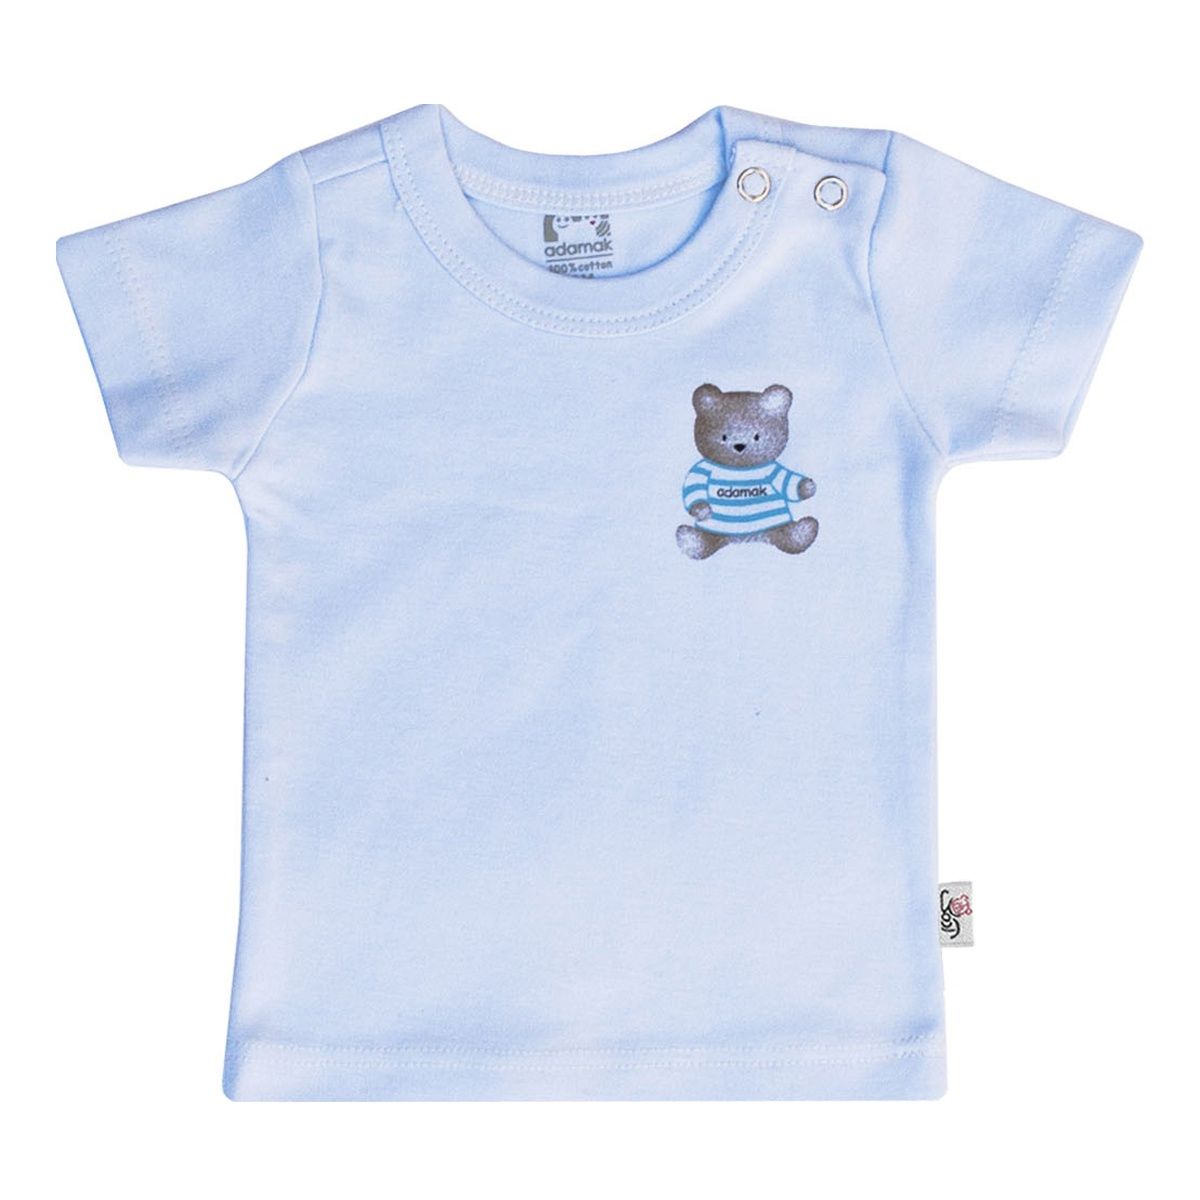  تی شرت آستین کوتاه نوزاد آدمک طرح خرس رنگ آبی -  - 1